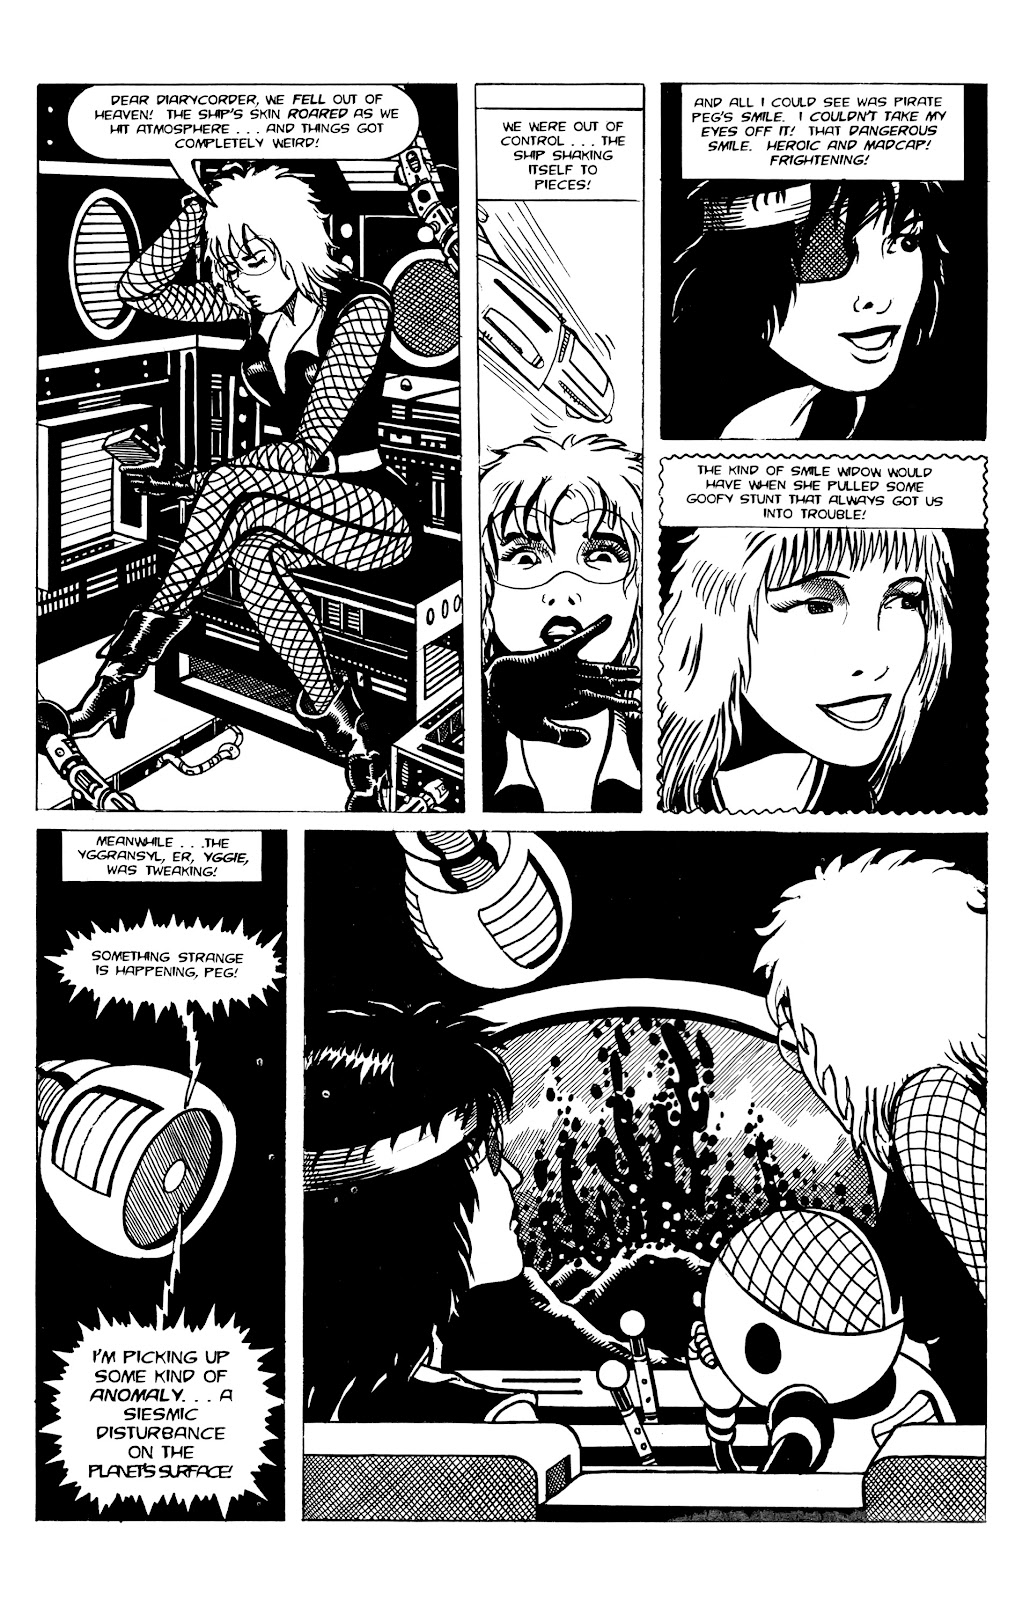 Strange Attractors (1993) issue 3 - Page 12